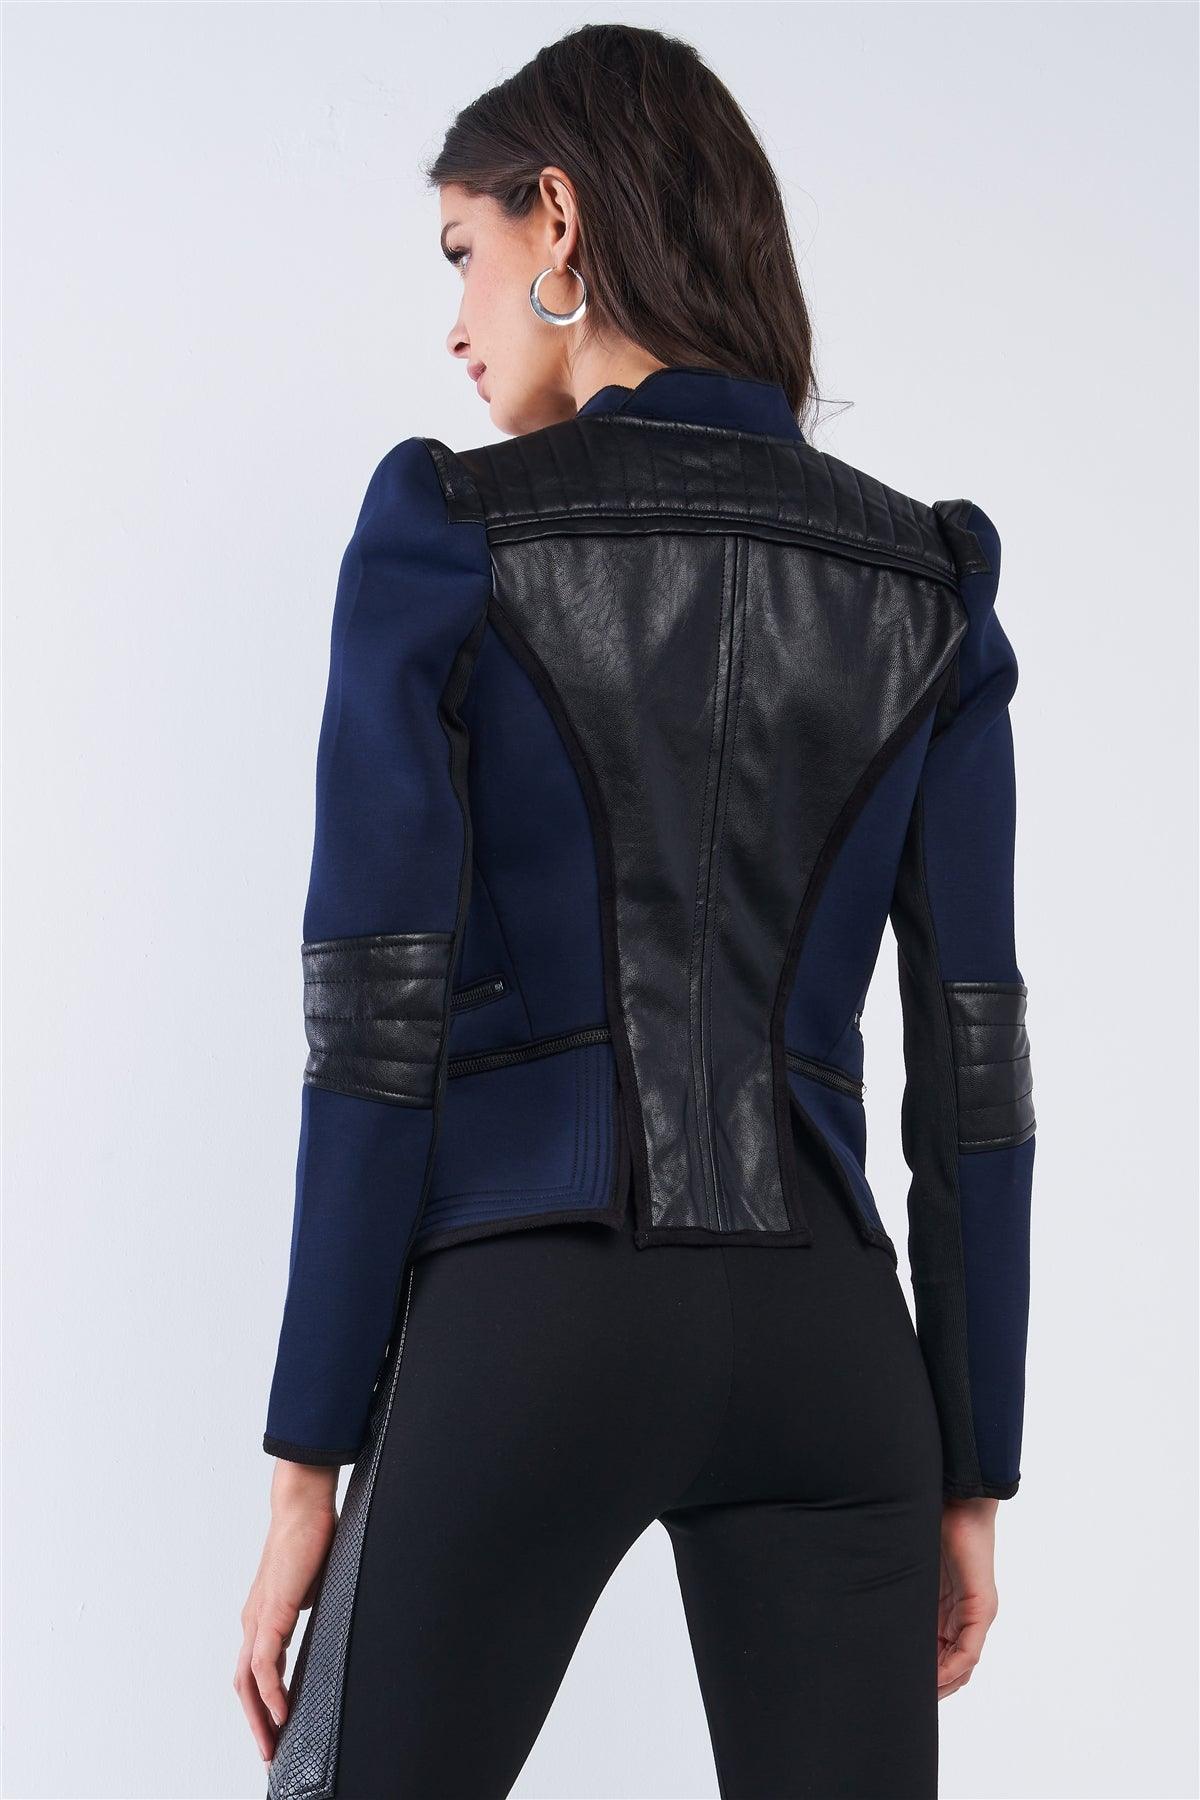 Rockstar Navy Blue Oblique Zipper Vegan Leather Jacket /2-2-2